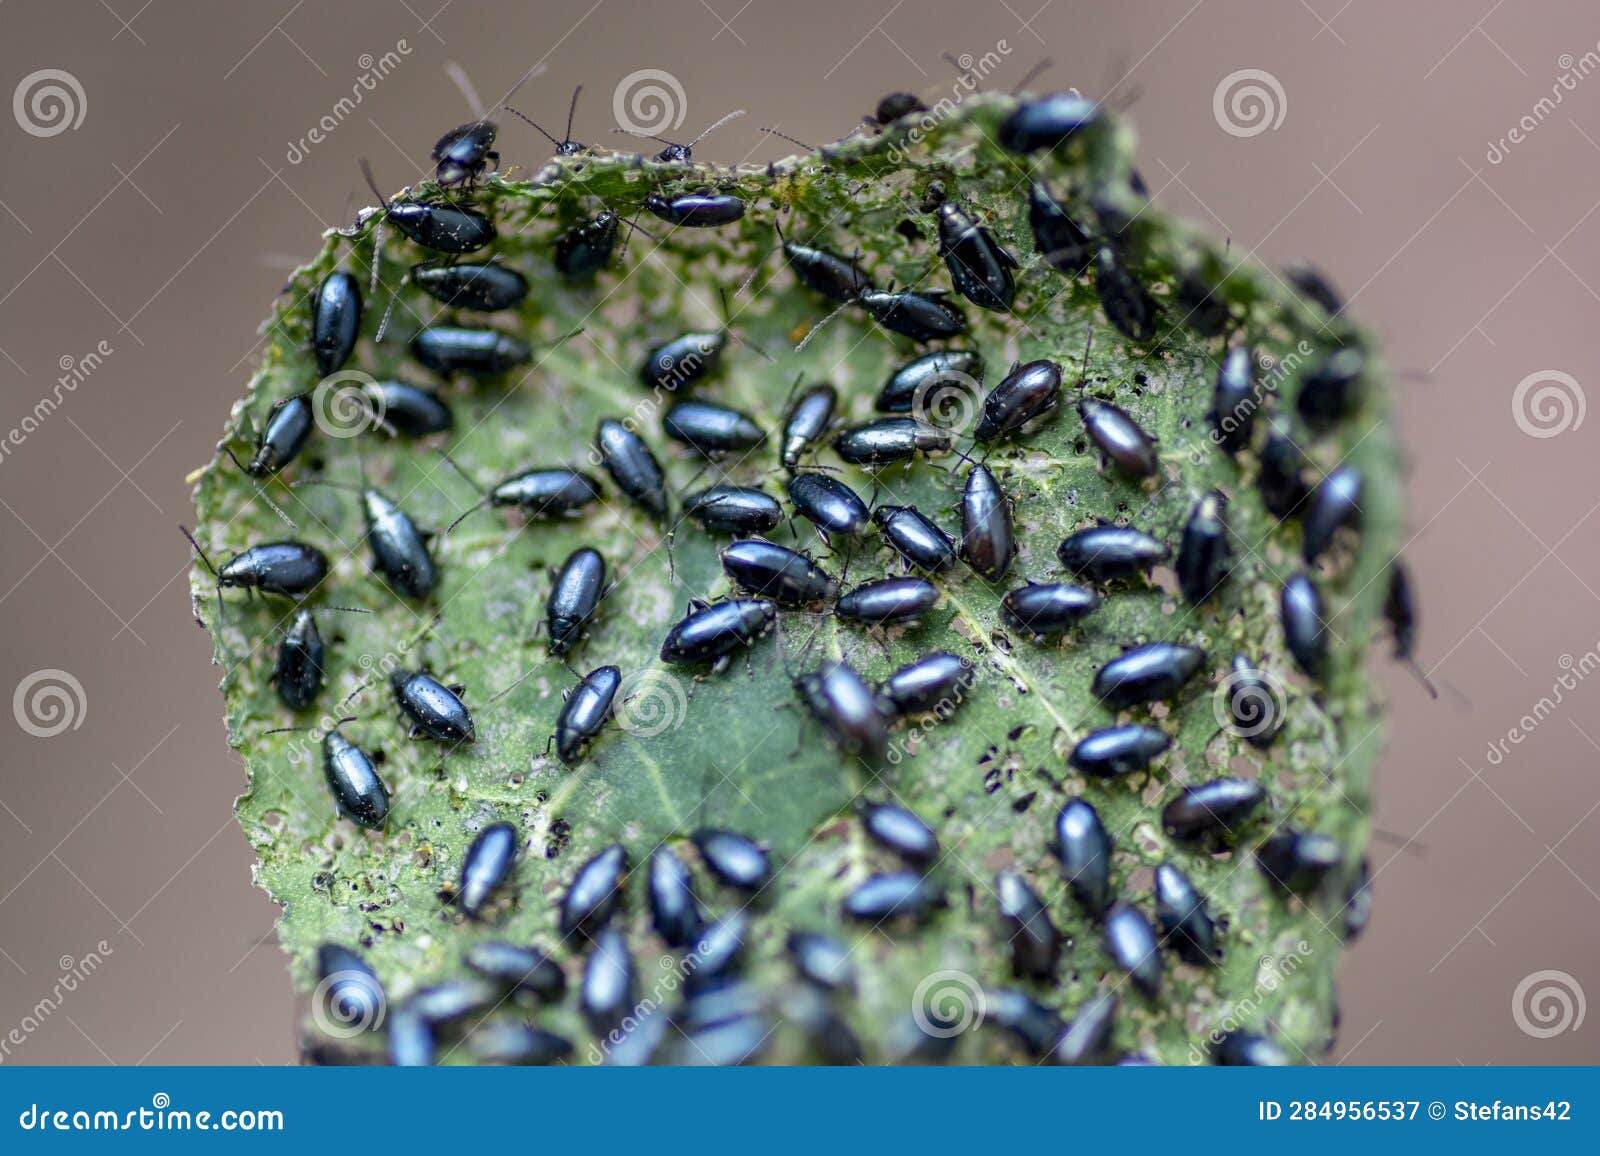 the garden nasturtium (tropaeolum majus) infested with cabbage flea beetle (phyllotreta cruciferae)